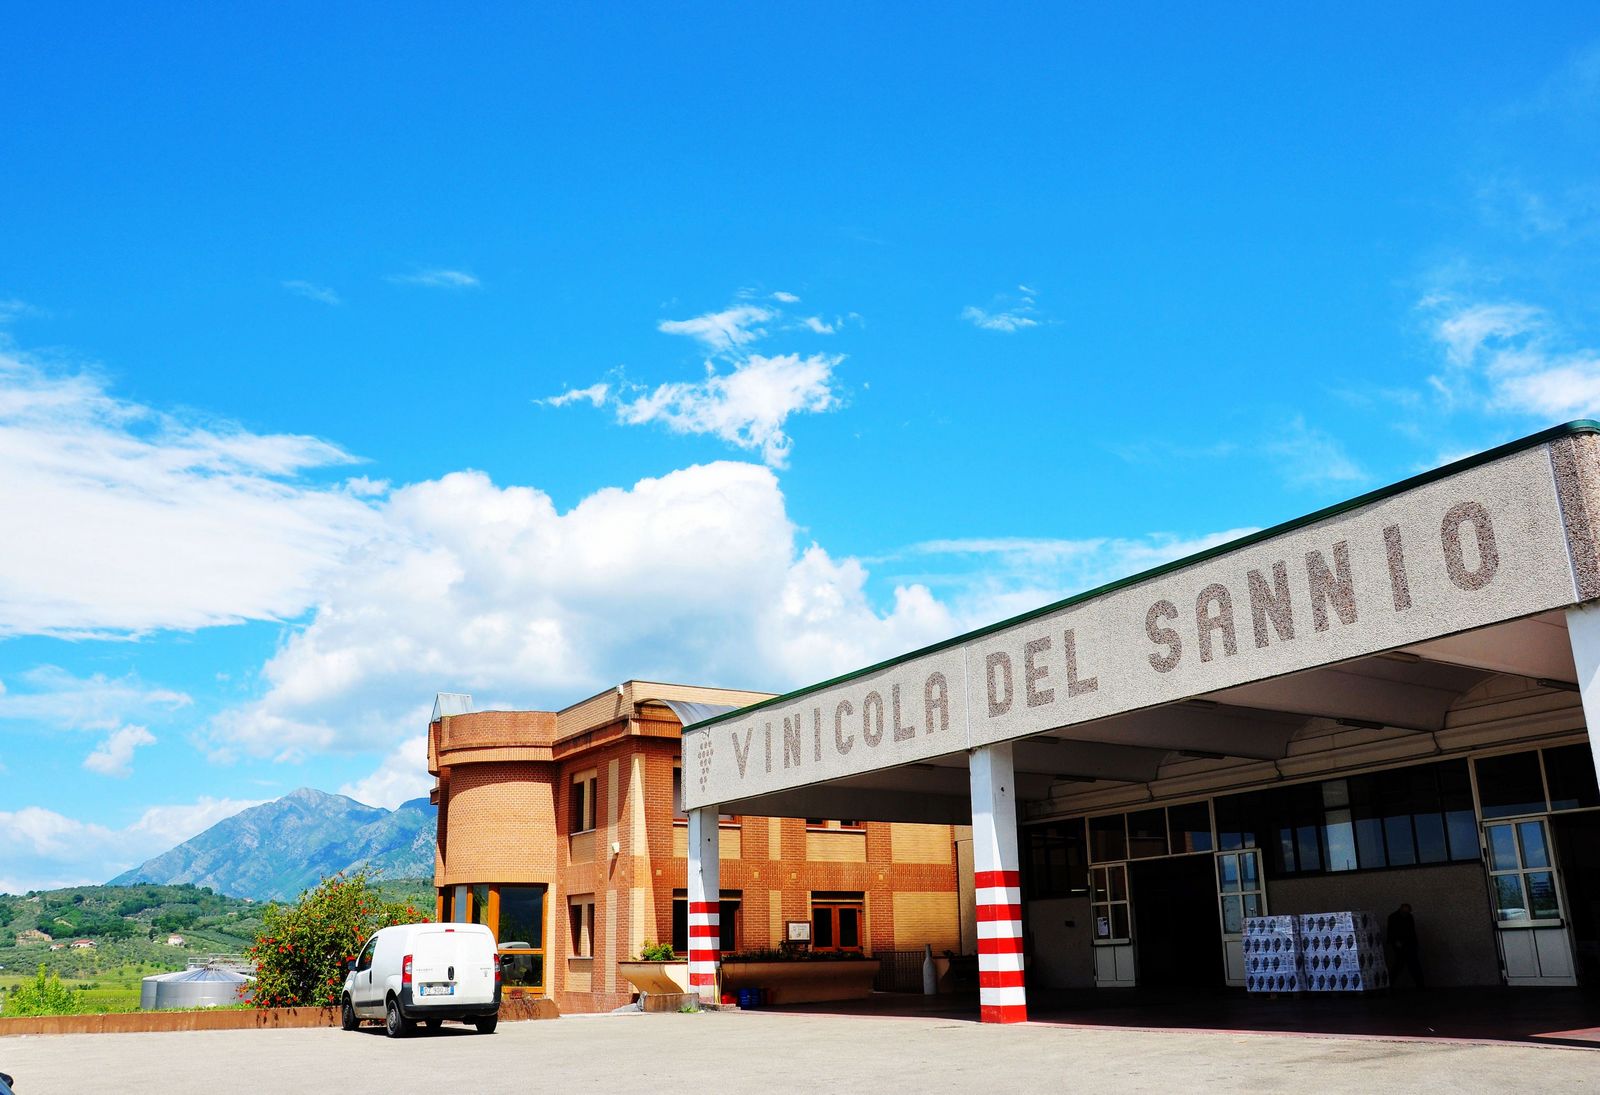 Vinicola del Sannio srl坐落於維納斯堡鎮